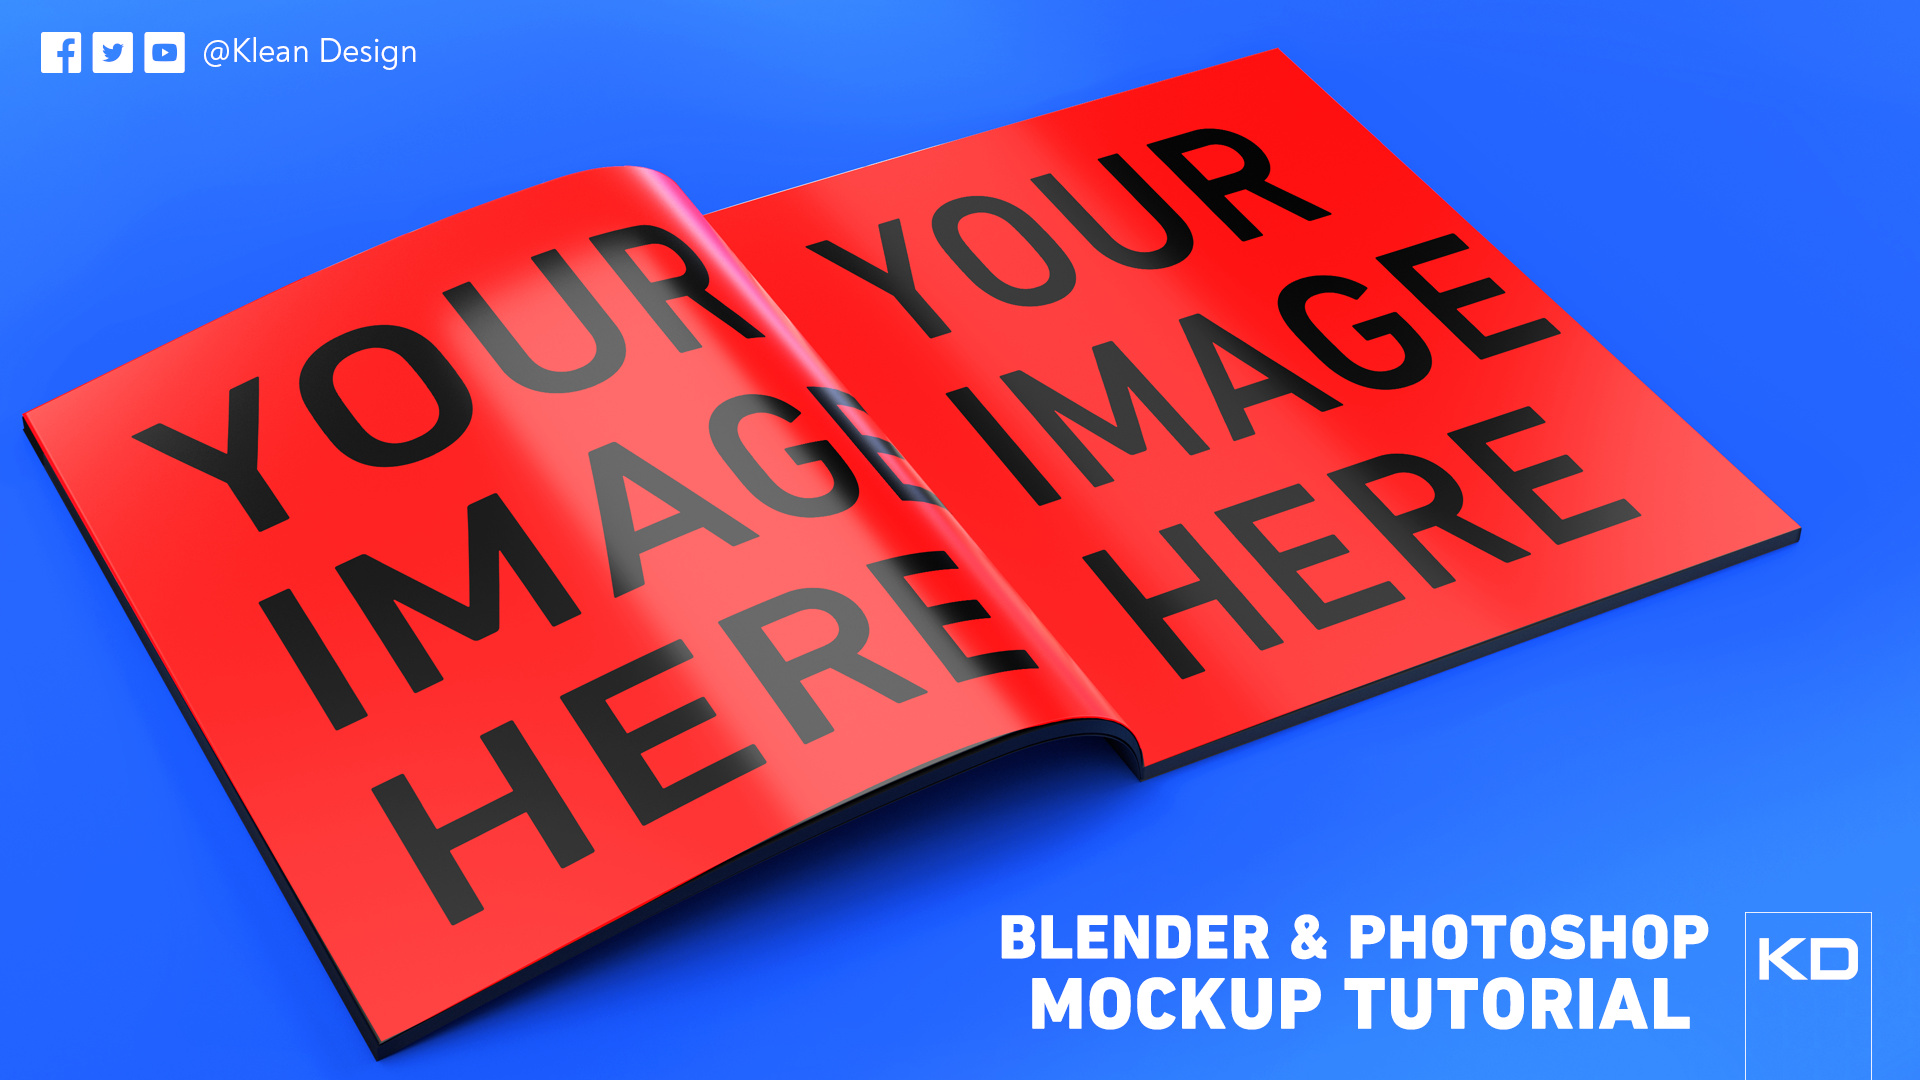 Download Mockup In Blender 2 8 With Photoshop Tutorial Workflow Tutorials Tips And Tricks Blender Artists Community